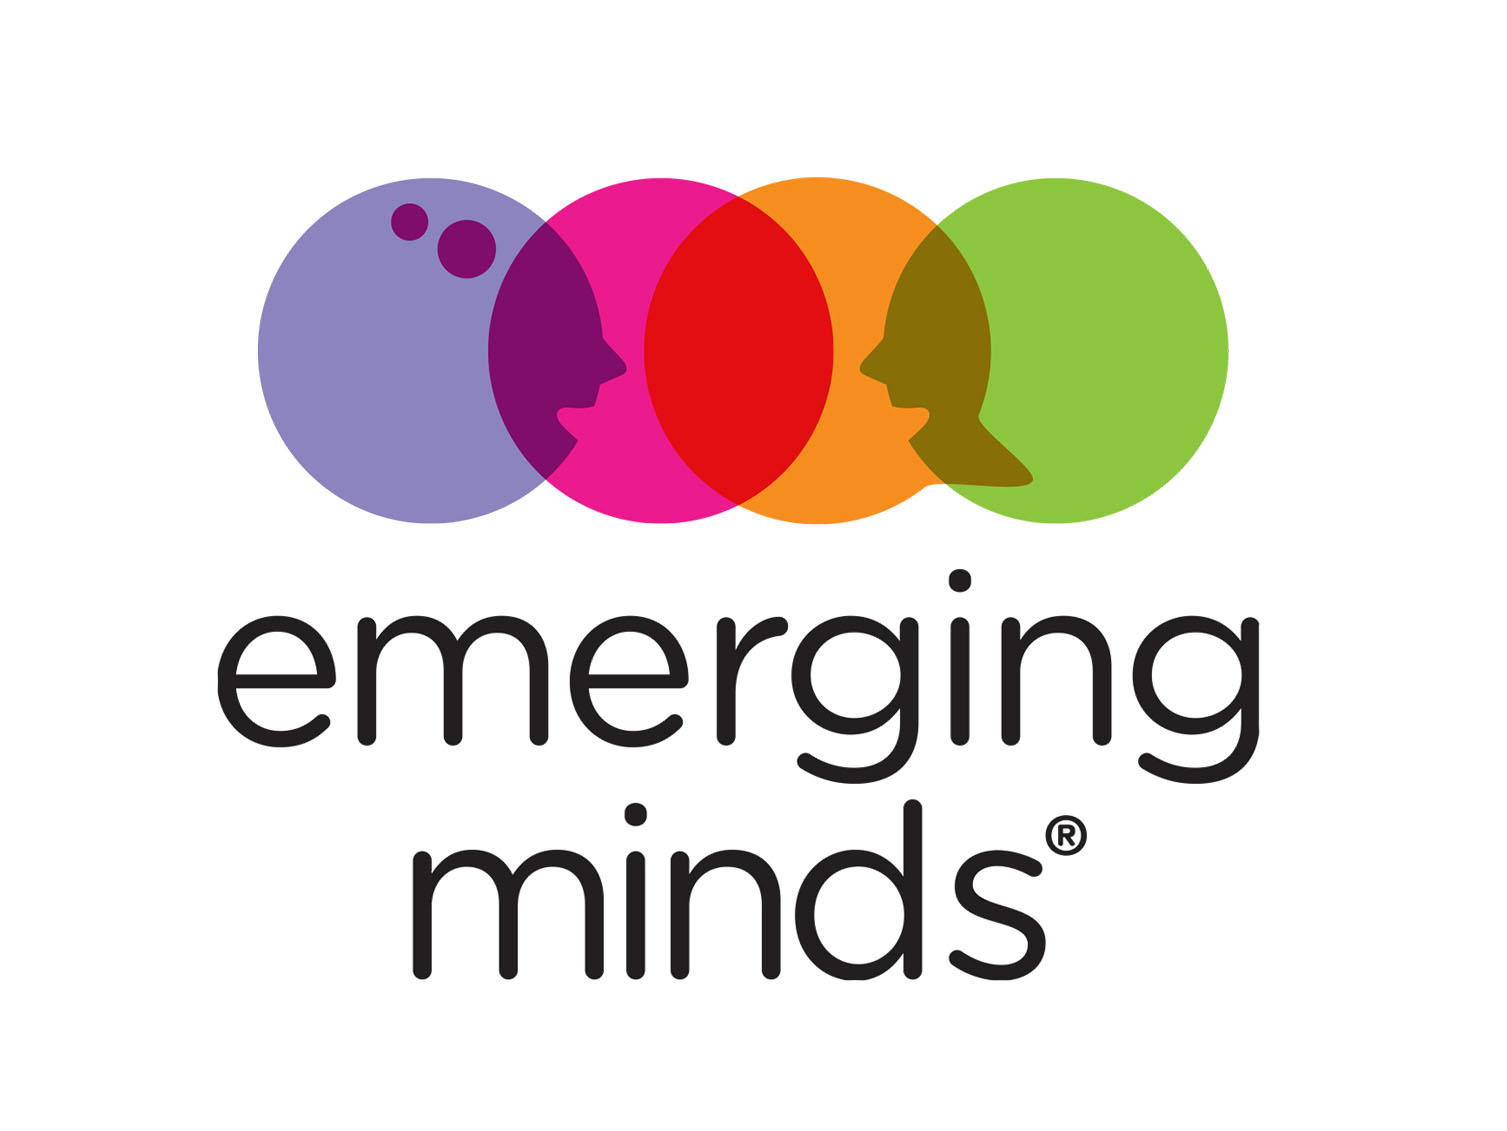 Emerging Minds logo